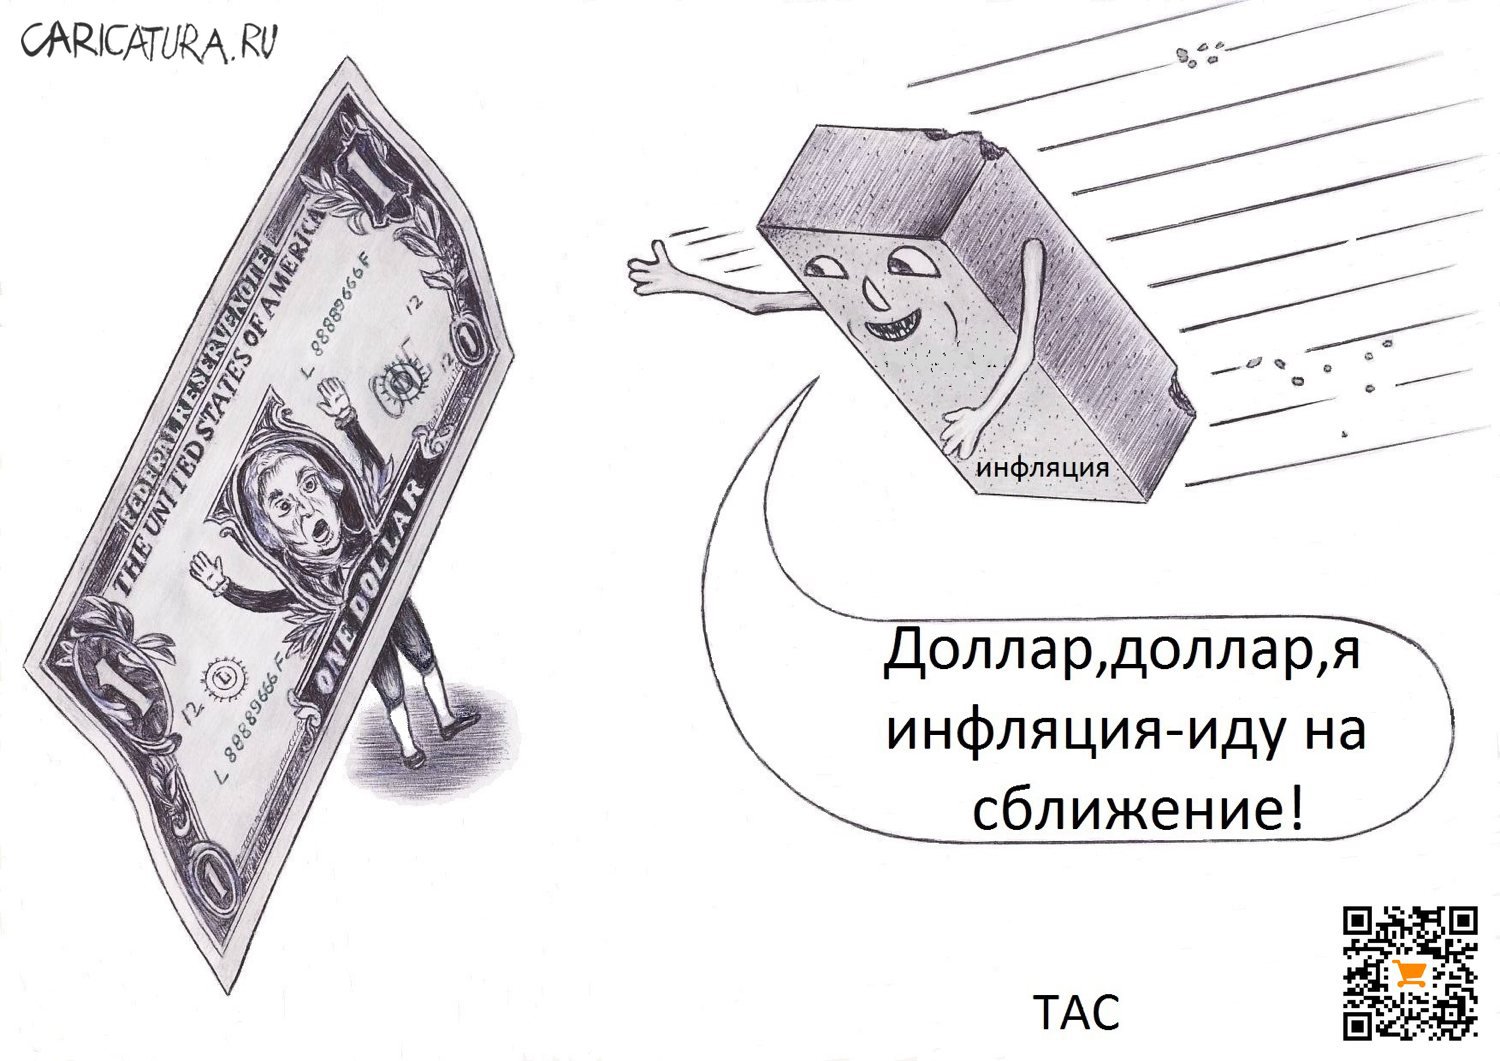 Карикатура "Небывалая инфляция", Александр Троицкий